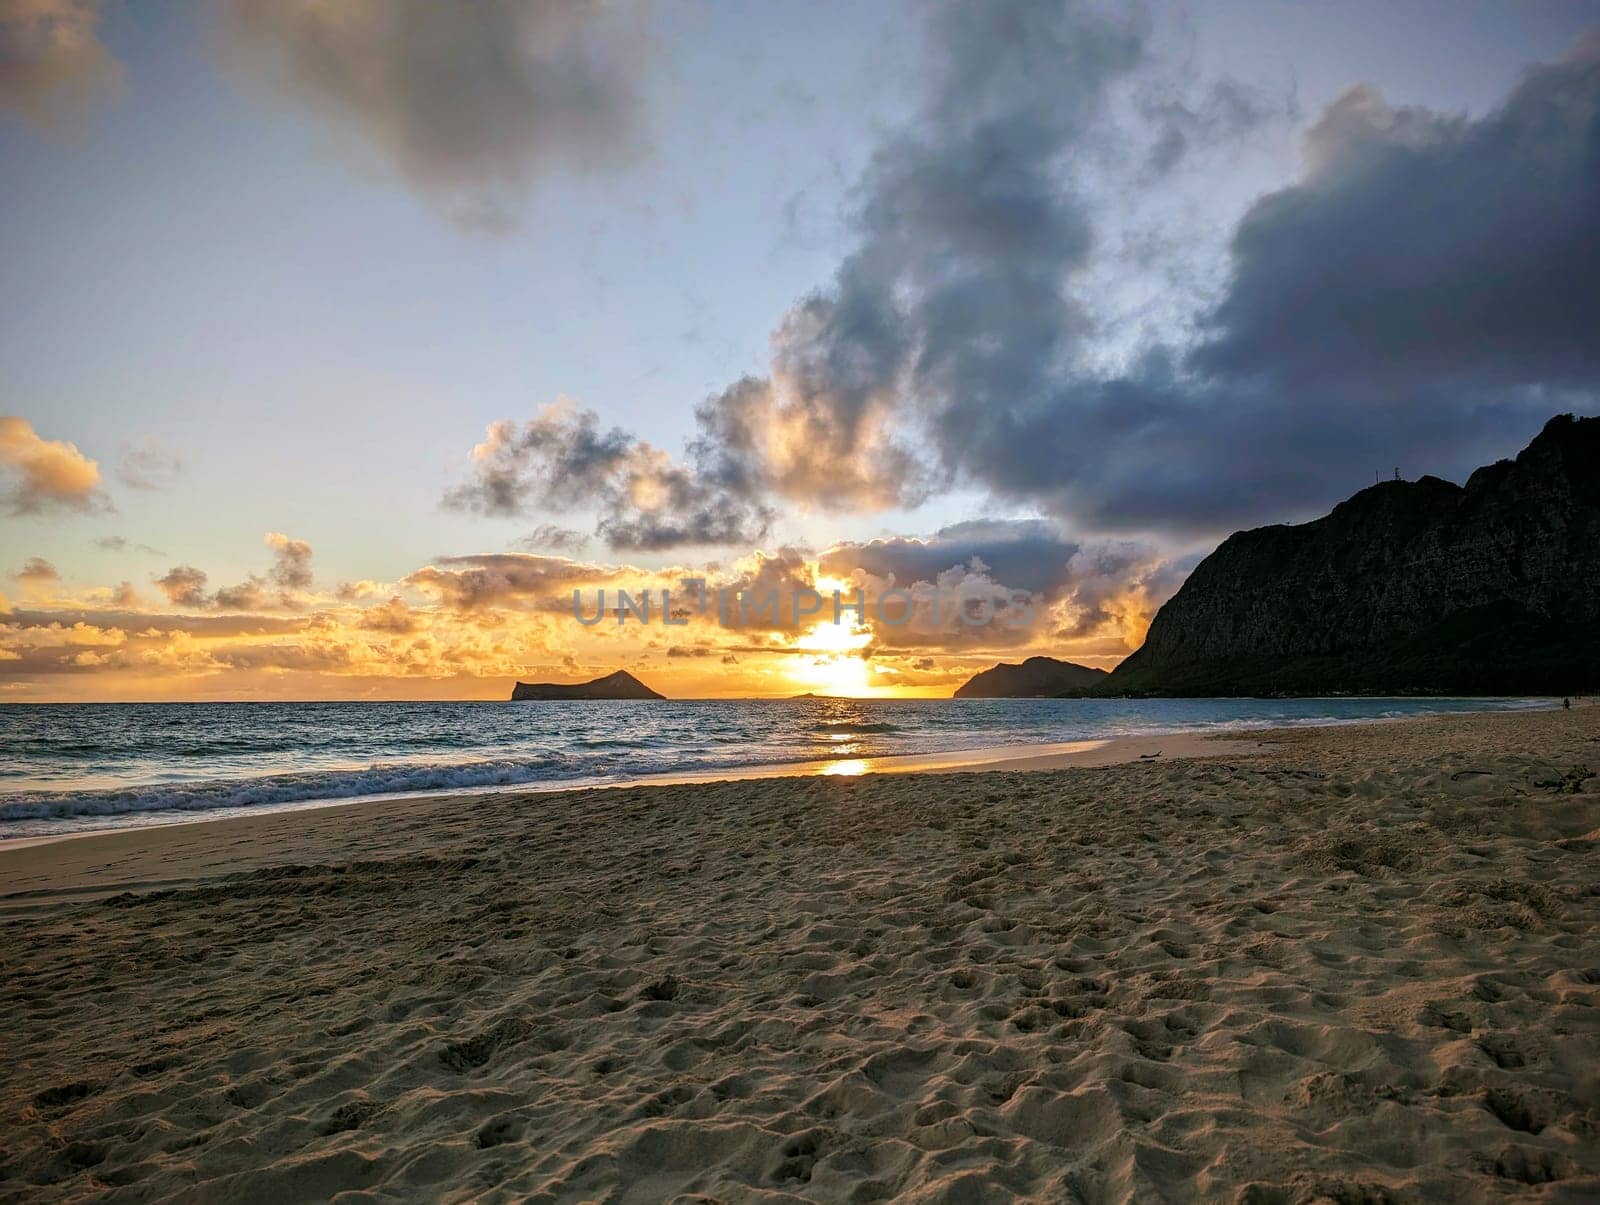 Sunrise on Waimanalo Beach, Hawaii by EricGBVD